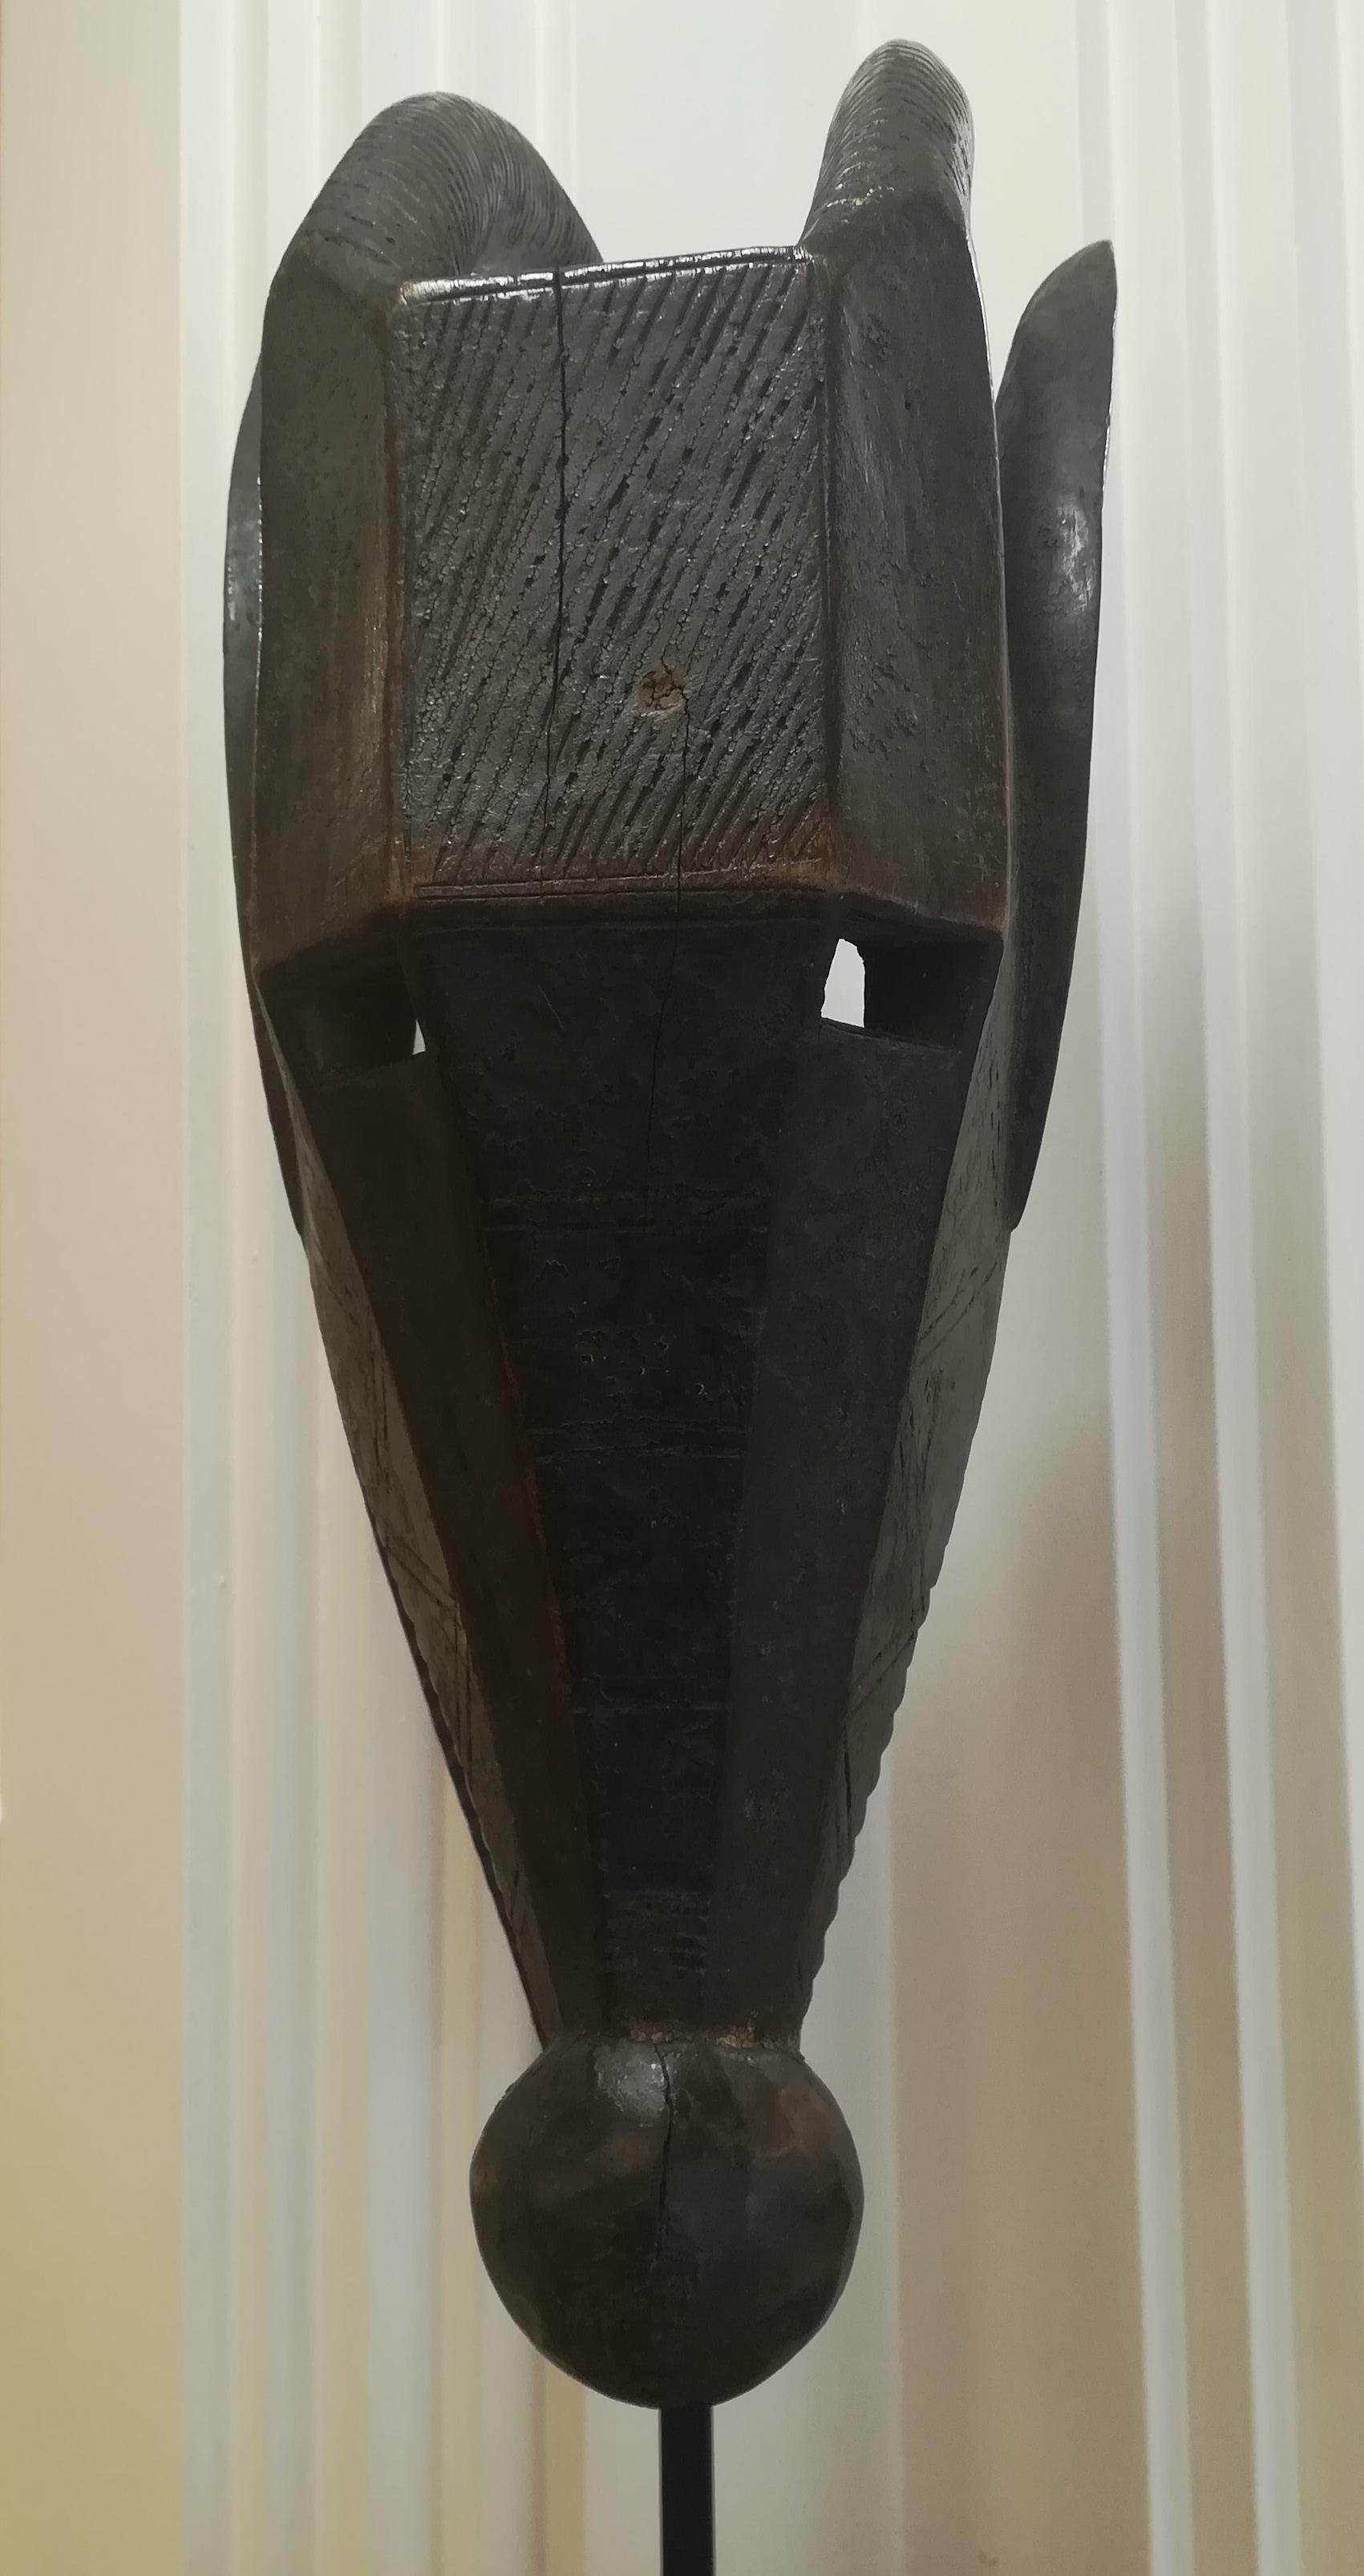 Bambara buffalo head bambara mask, Mali, end of the 19th century
Measures: H with pedestal 63 cm.
    